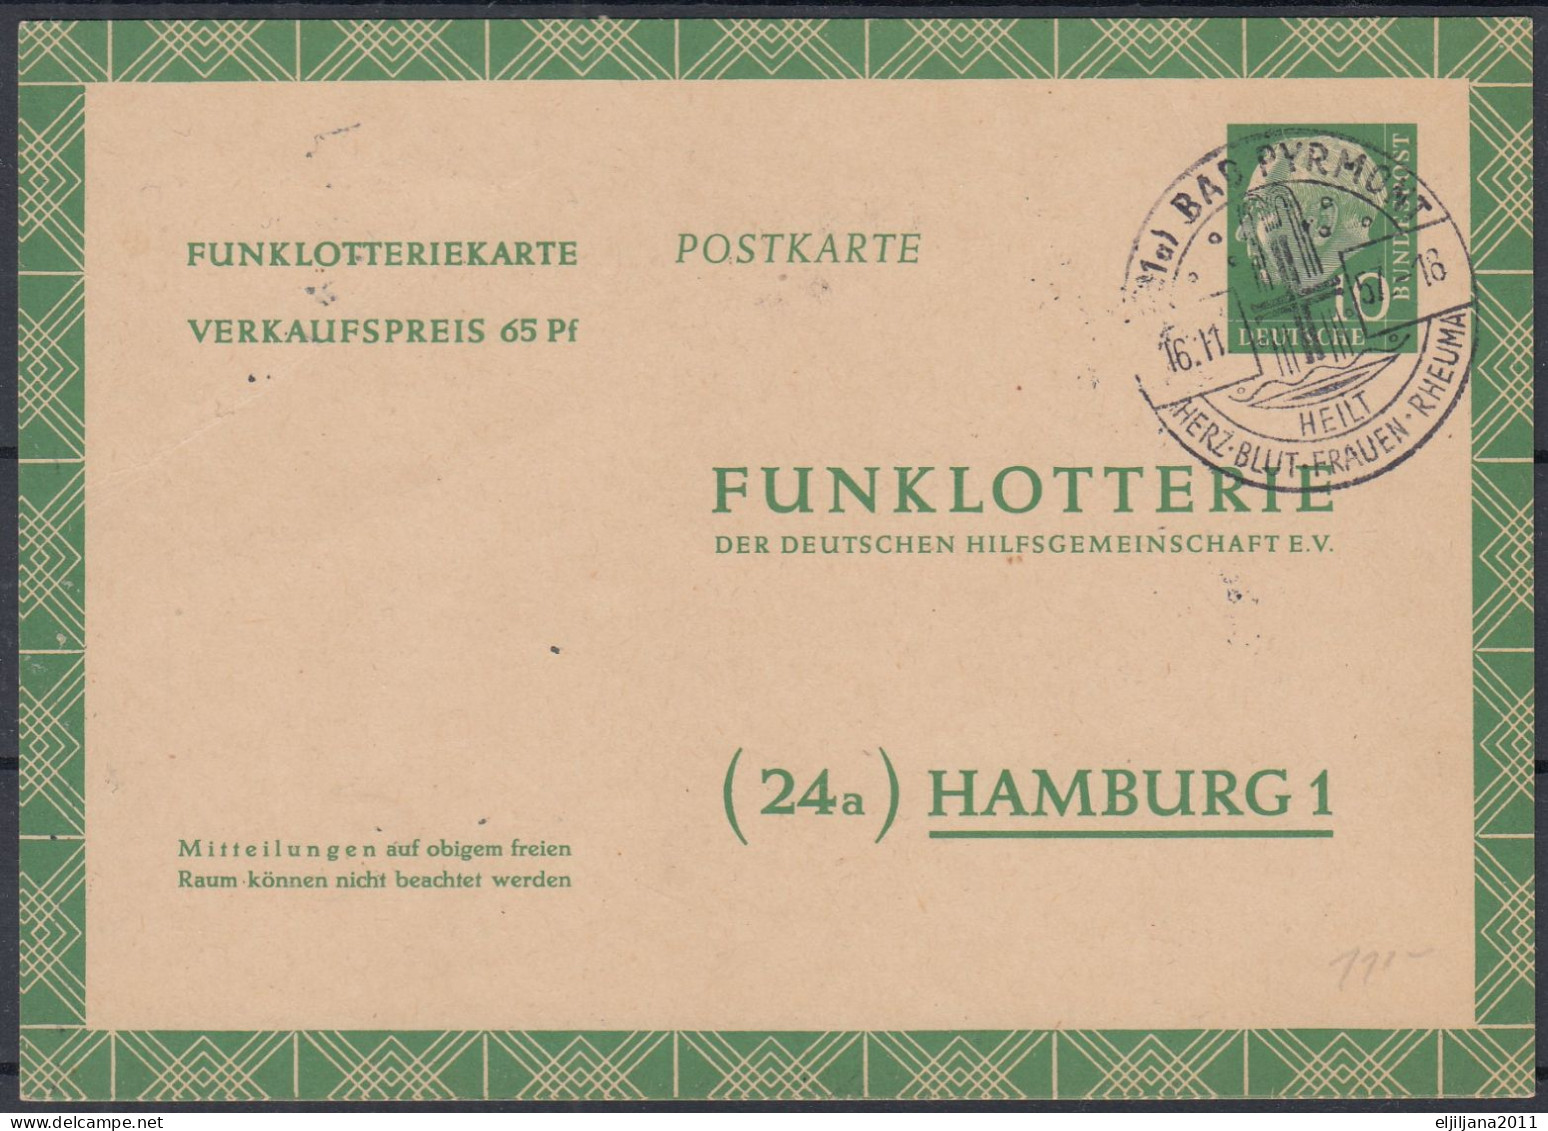 ⁕ Germany 1957 Deutsche BundesPost ⁕ FUNKLOTTERIE (24a) Hamburg 1 ⁕ Bad Pyrmont Postmark ⁕ Stationery Postcard - Cartes Postales - Oblitérées